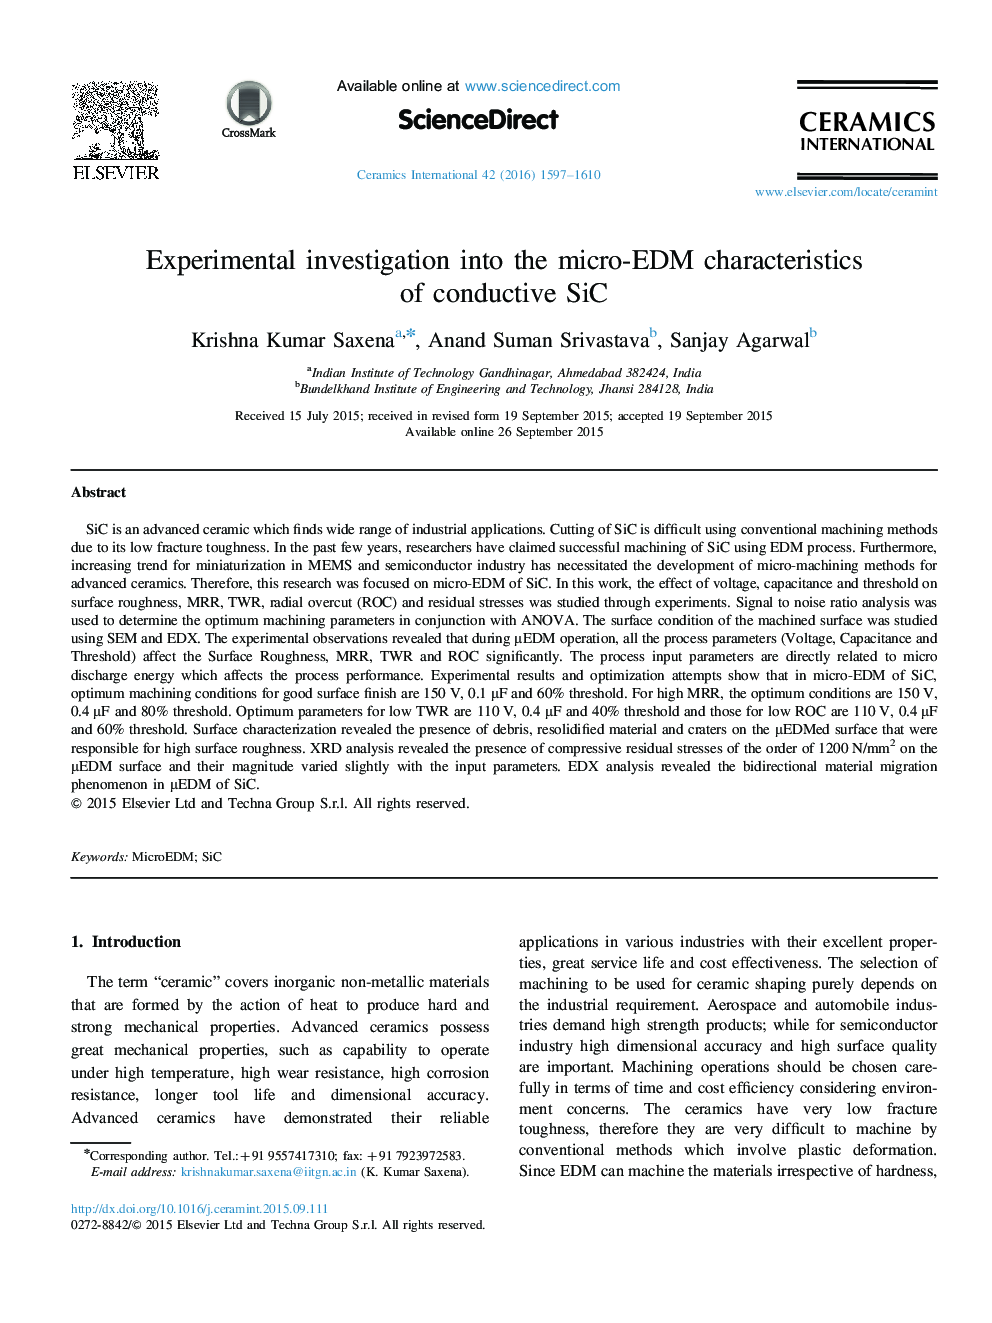 Experimental investigation into the micro-EDM characteristics of conductive SiC